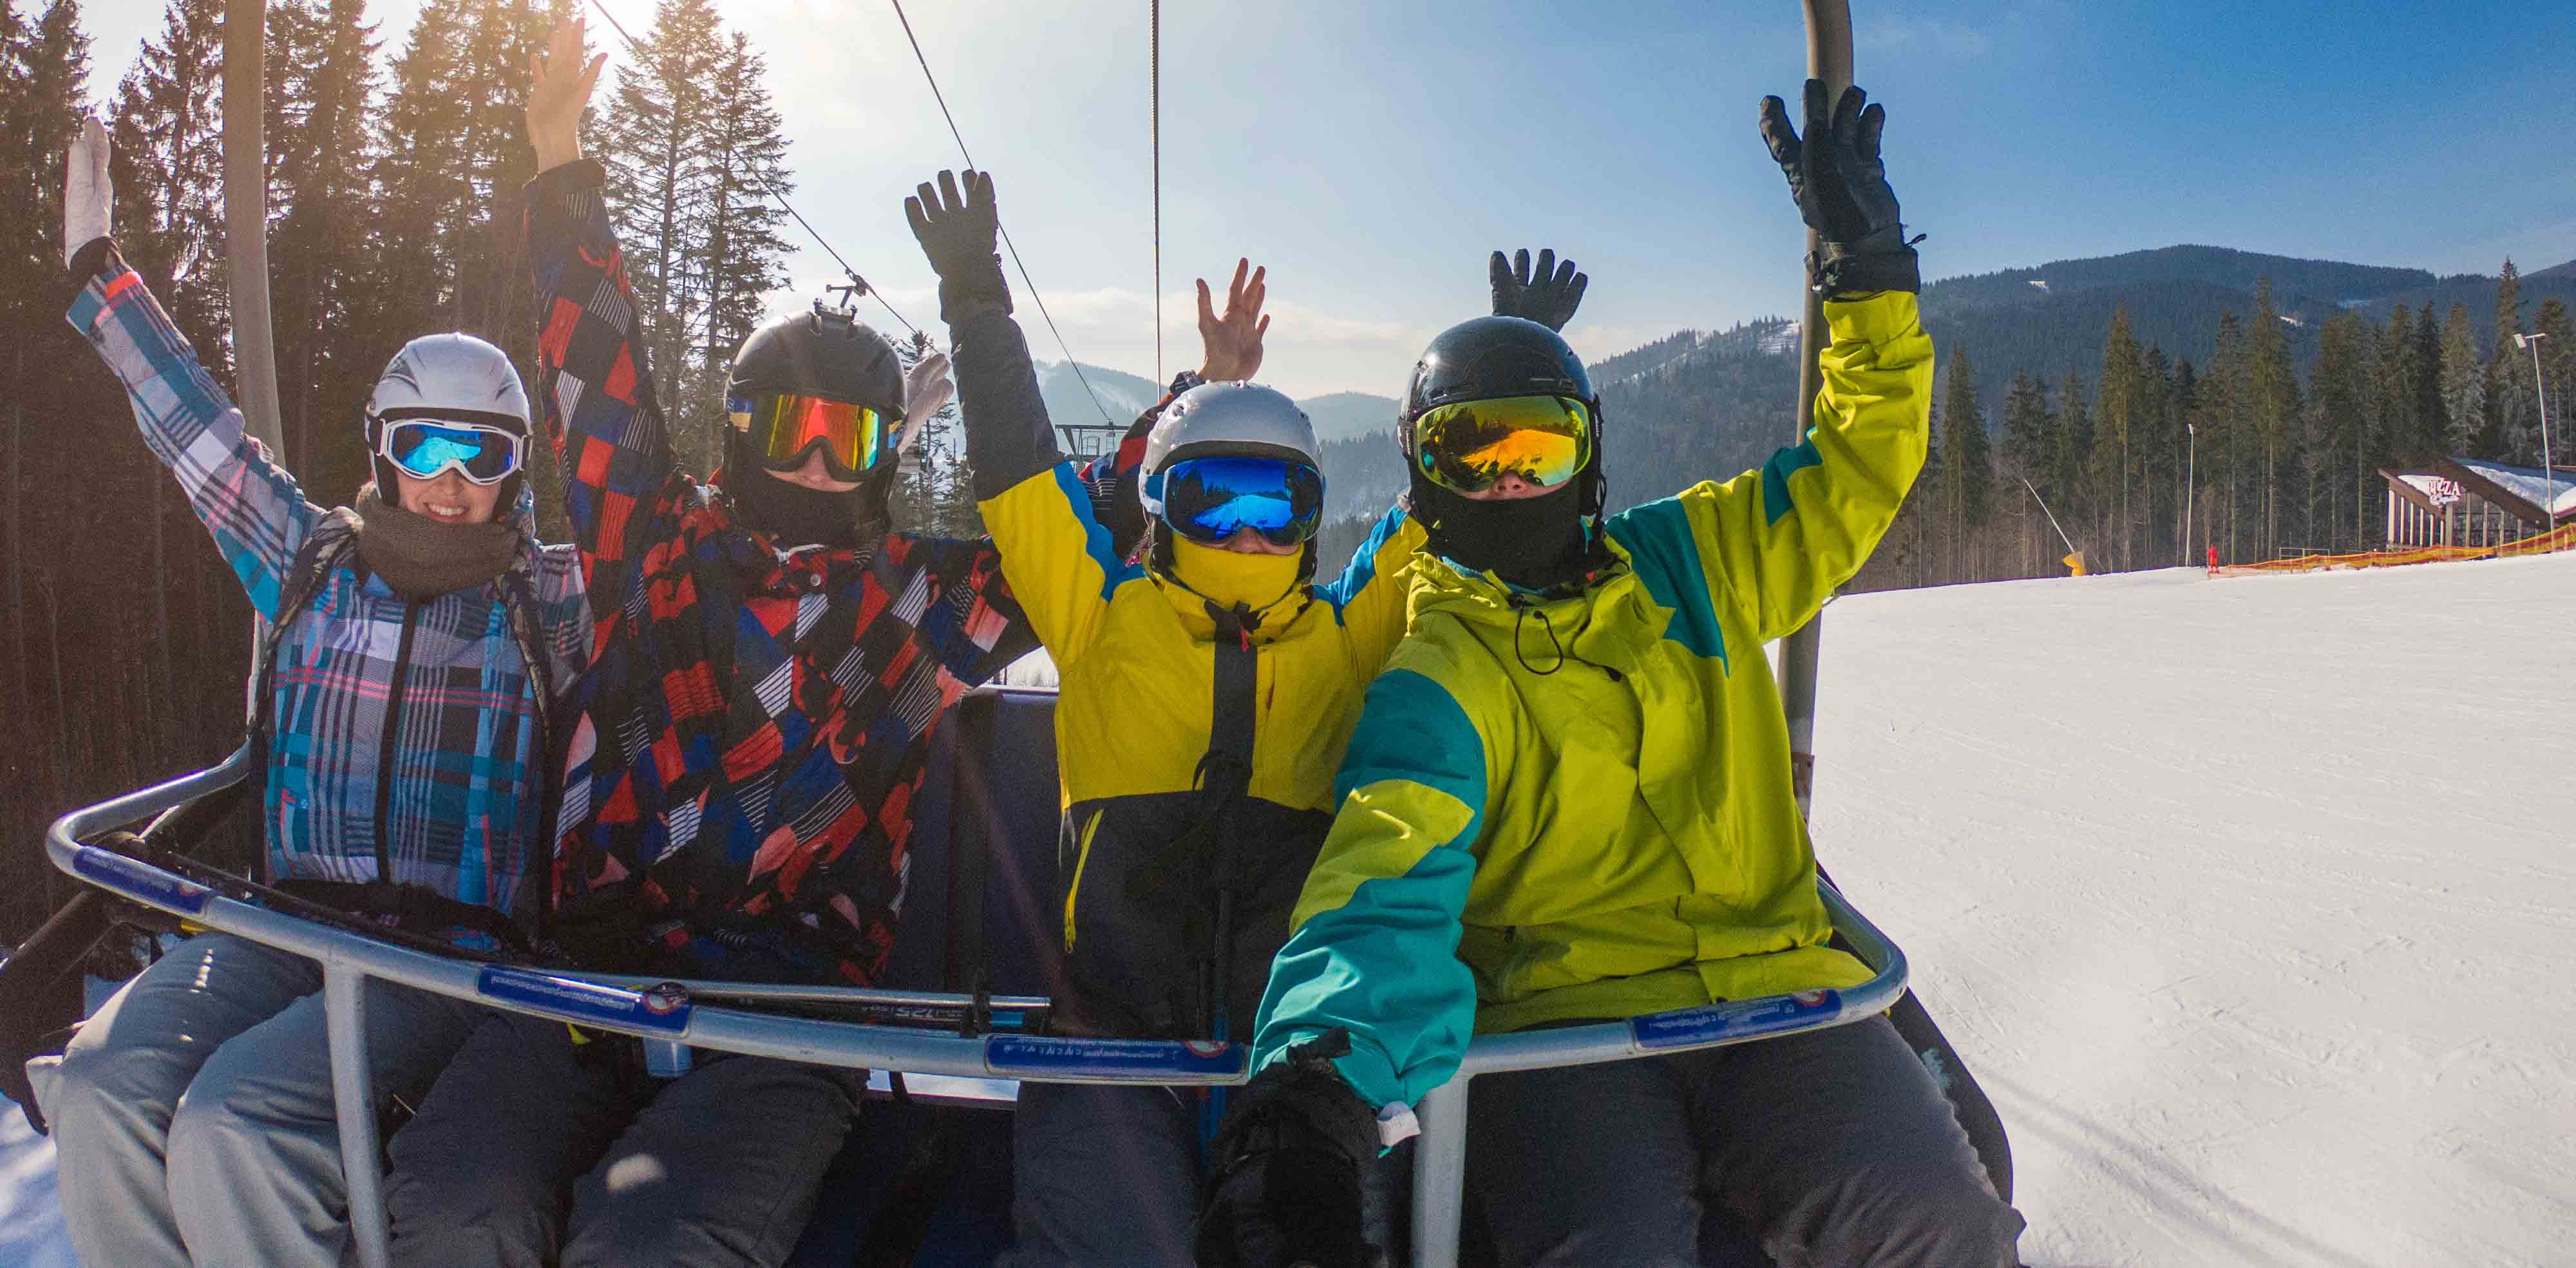 fire glade unge mennesker sittende i skiheis